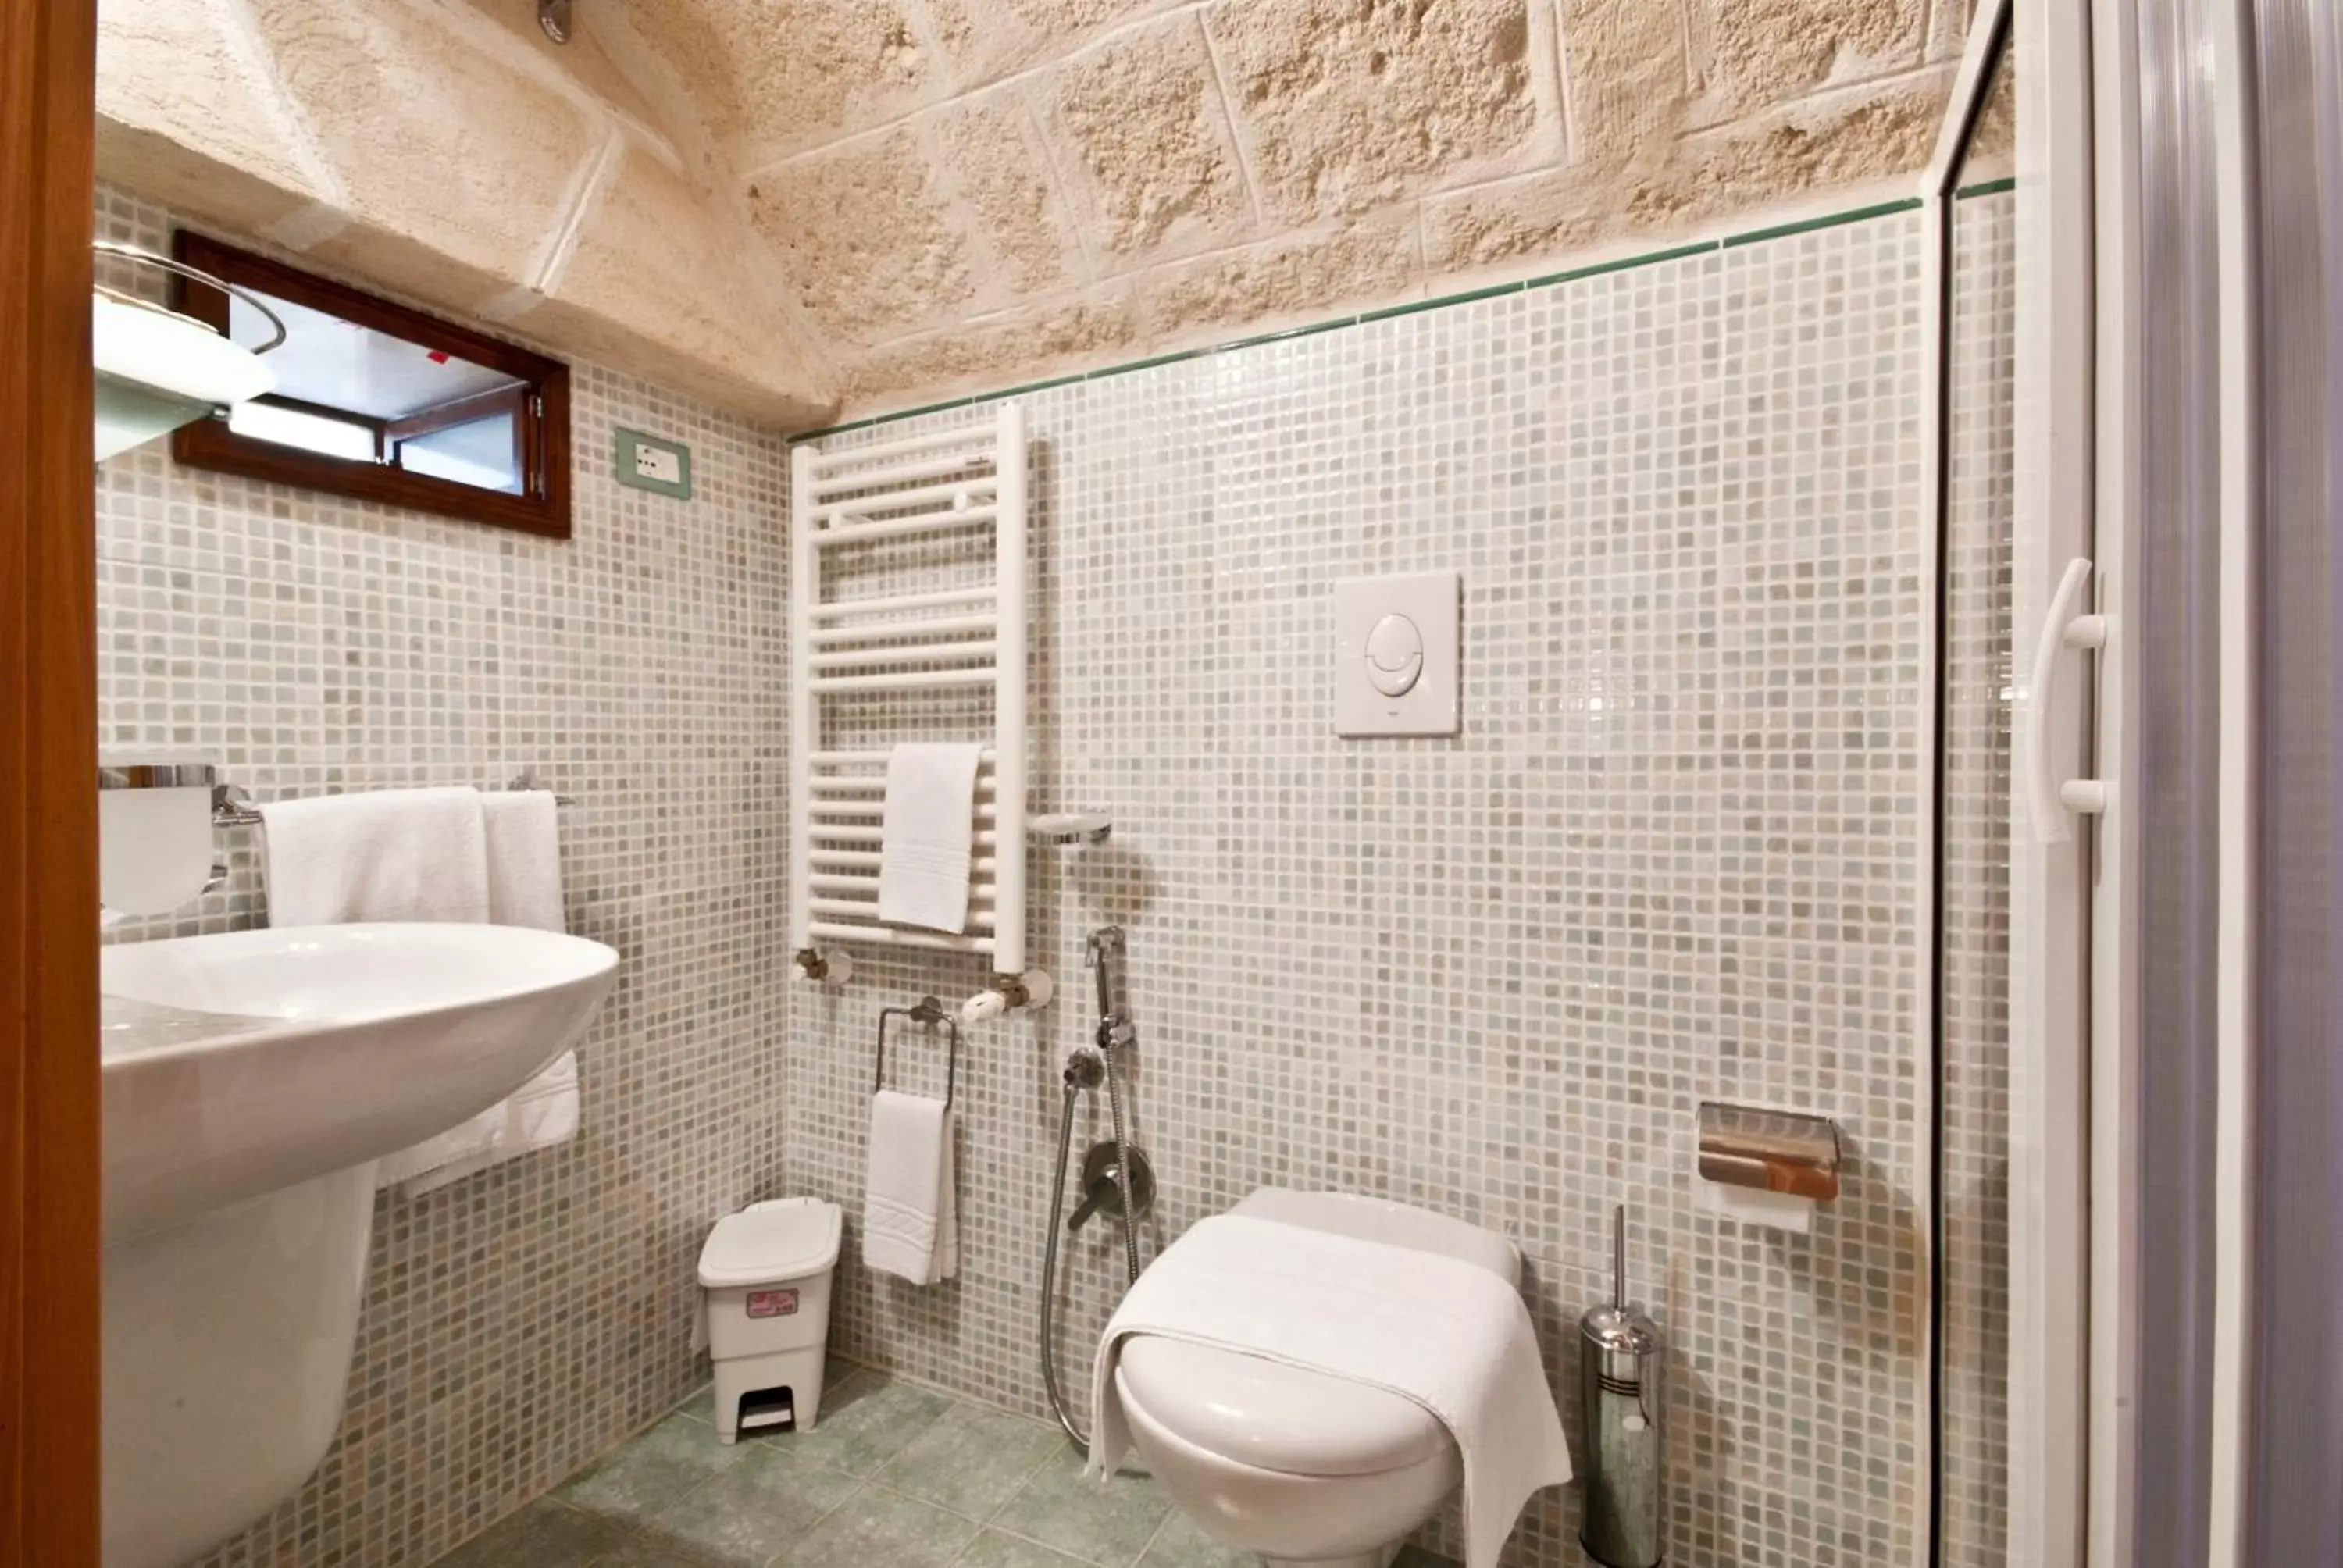 Bathroom in B&B Casa Cimino - Monopoli - Puglia